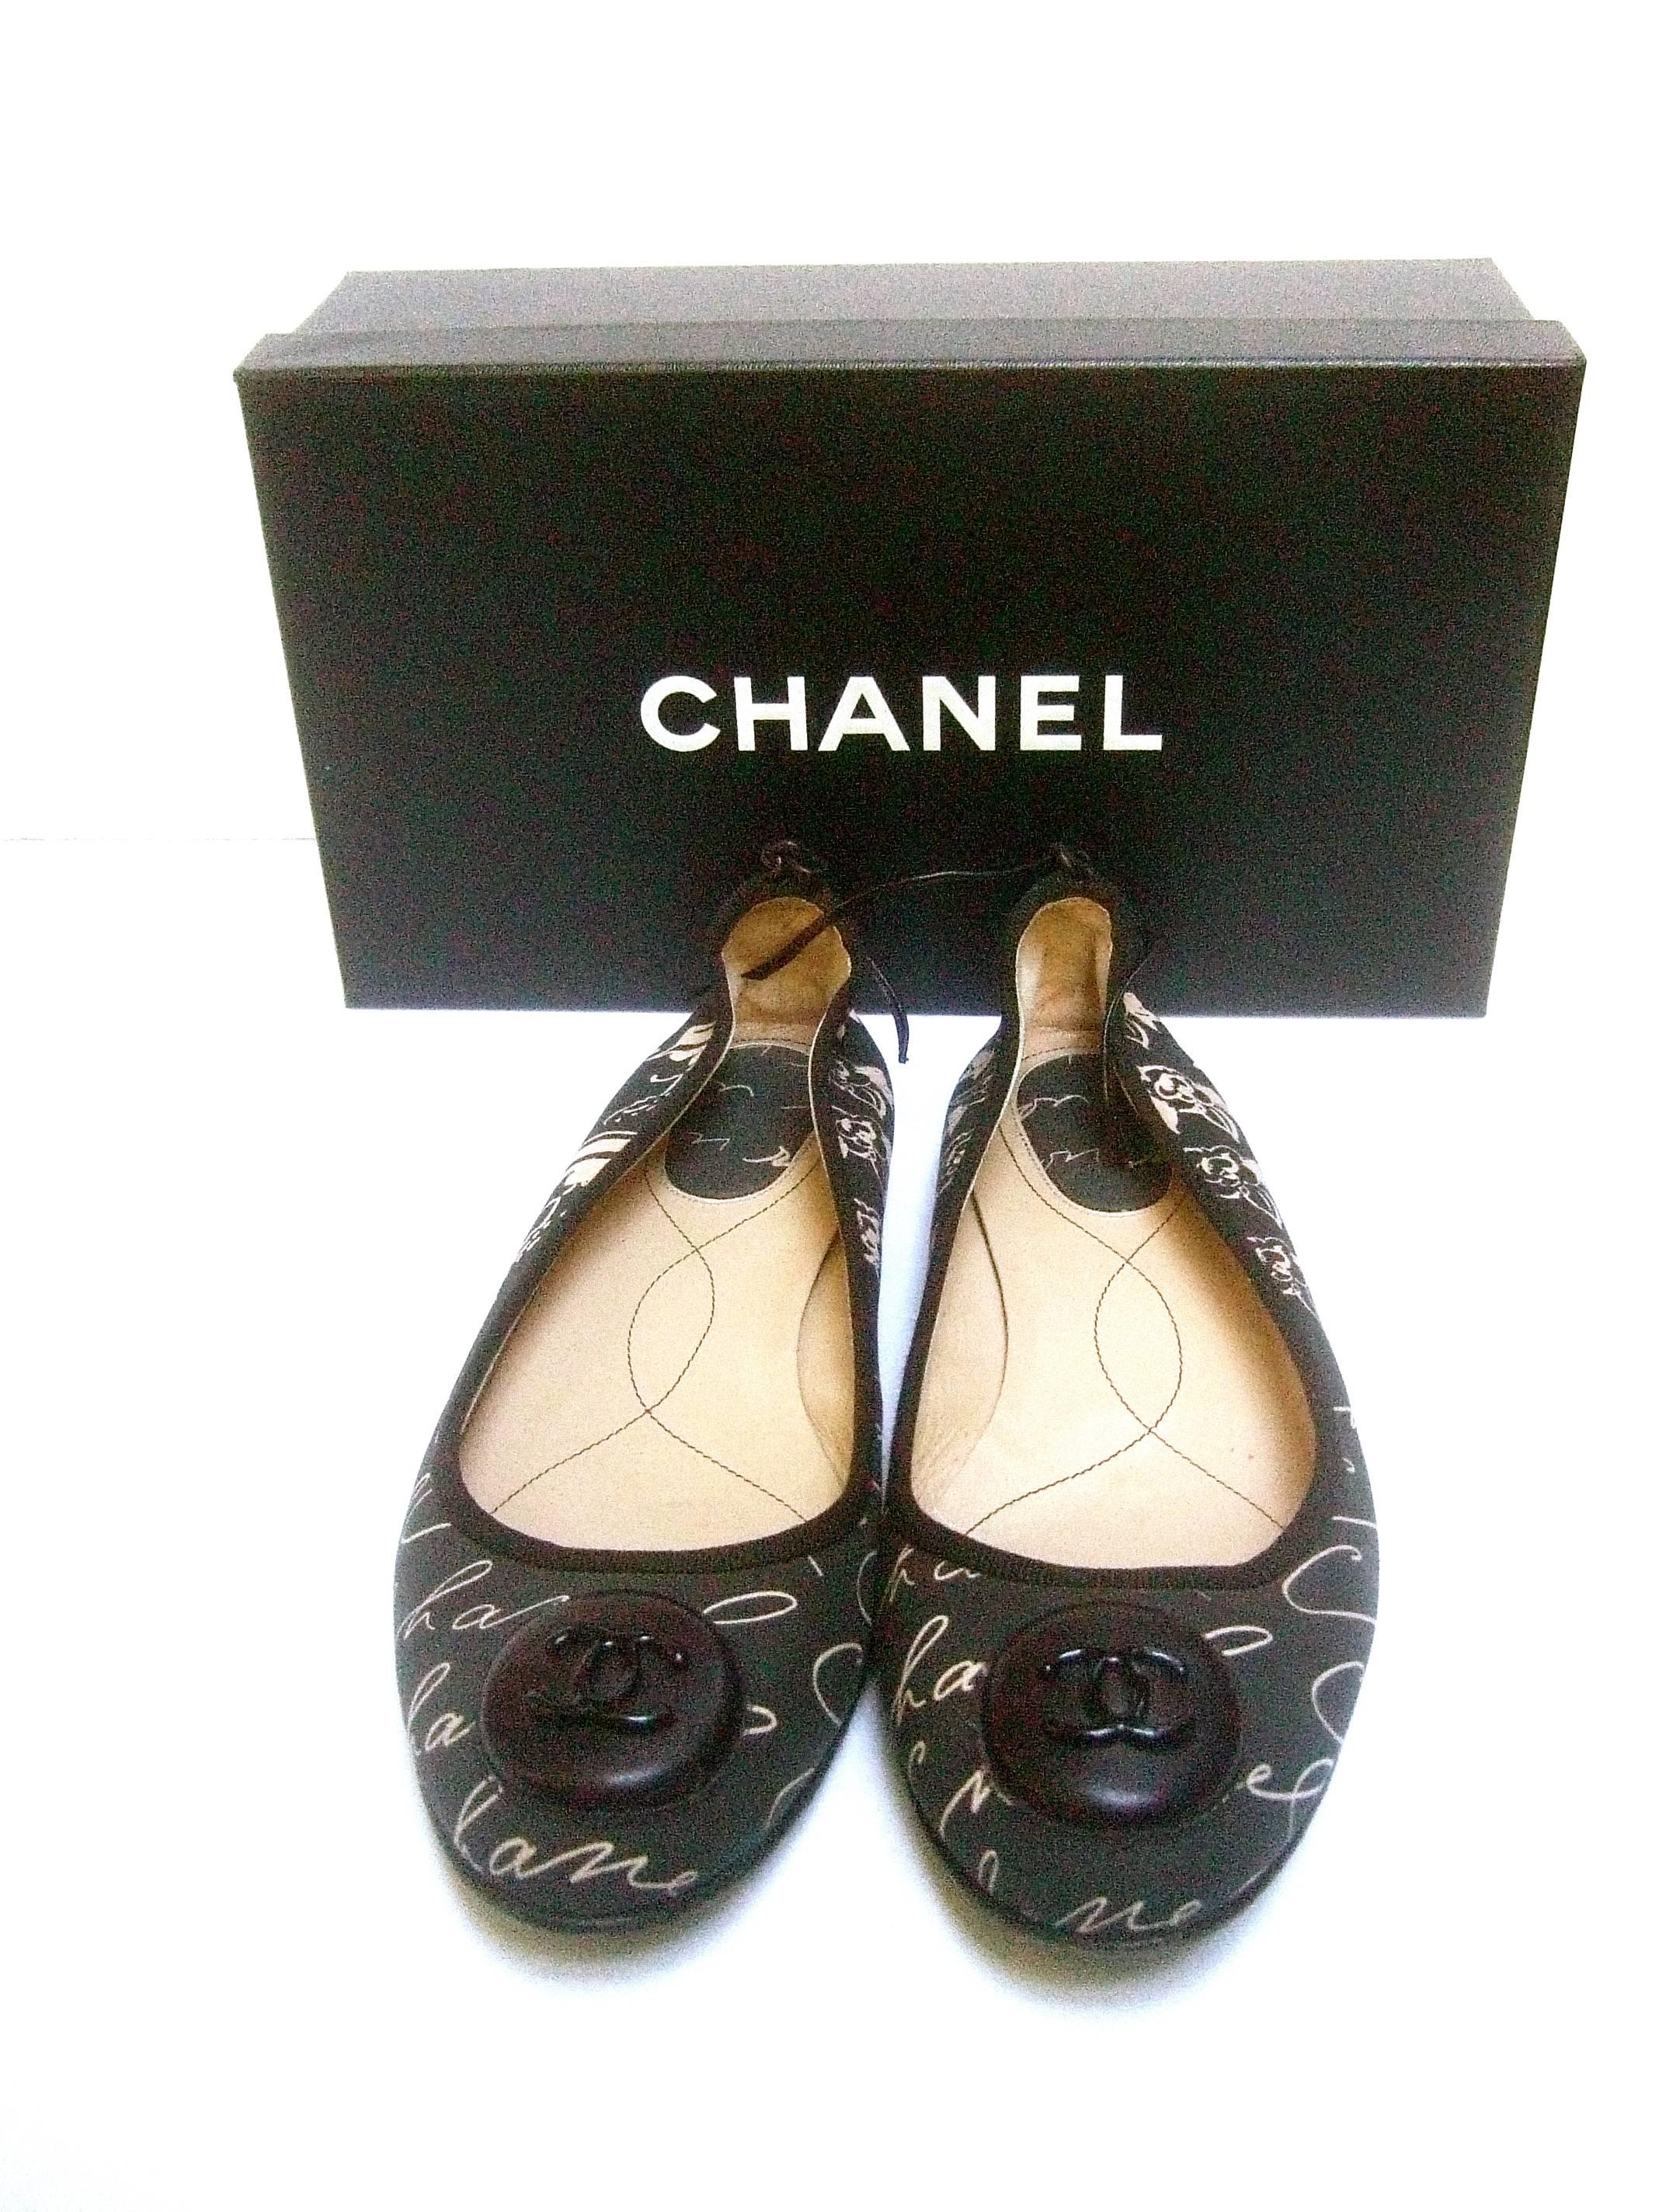 Chanel Iconic Italian Ballet Style Flats in Chanel Box U.S. 8  E.U. 38.5 2